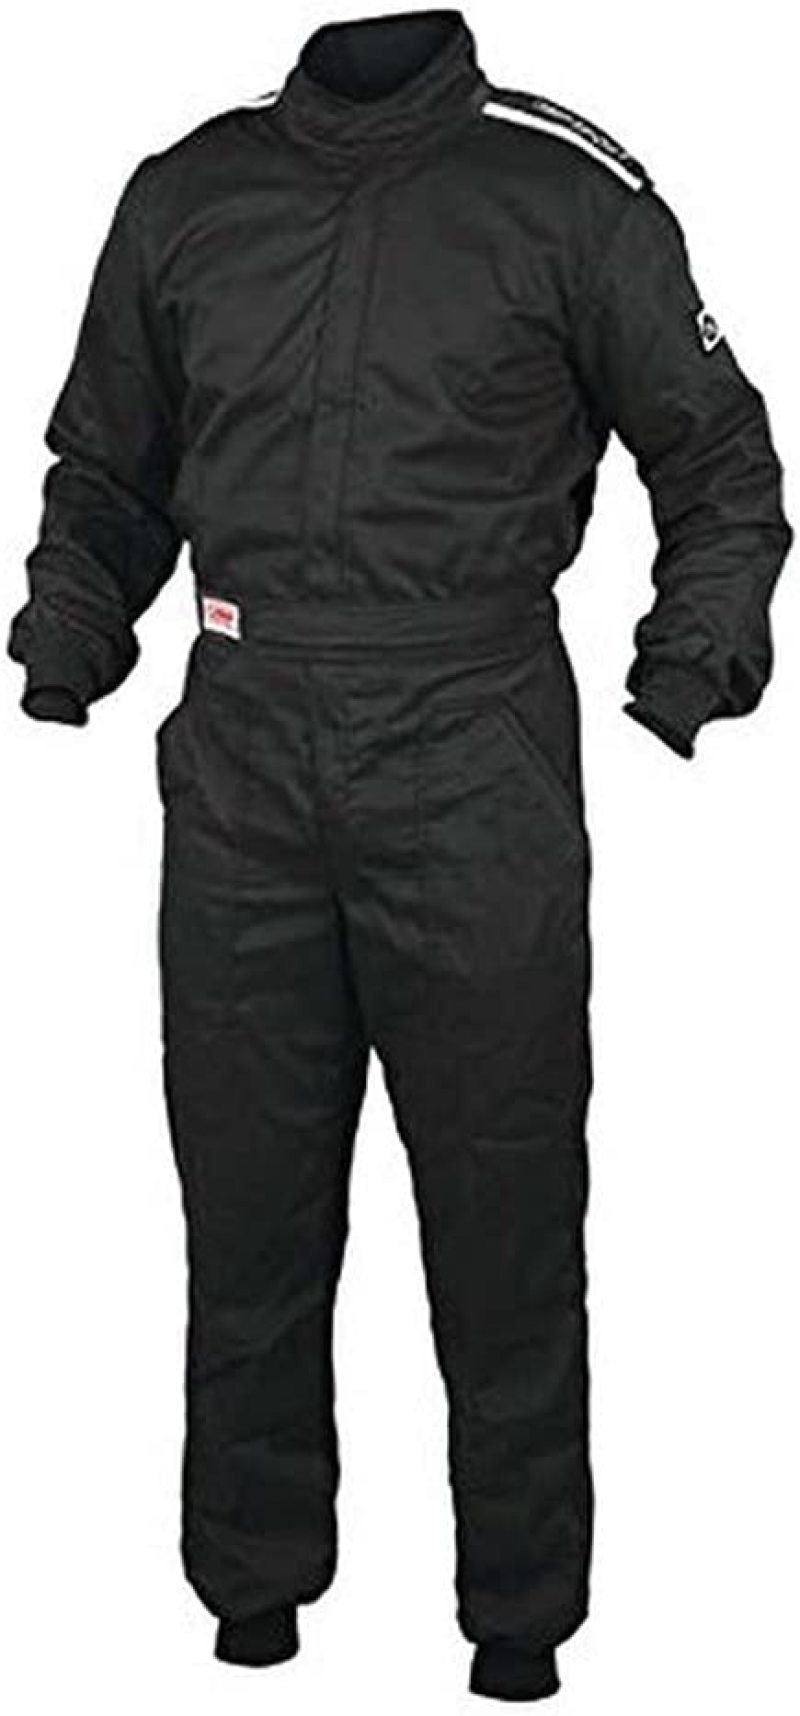 OMP Os 10 Suit - Small (Black) - IA0-1901-A01-071-S